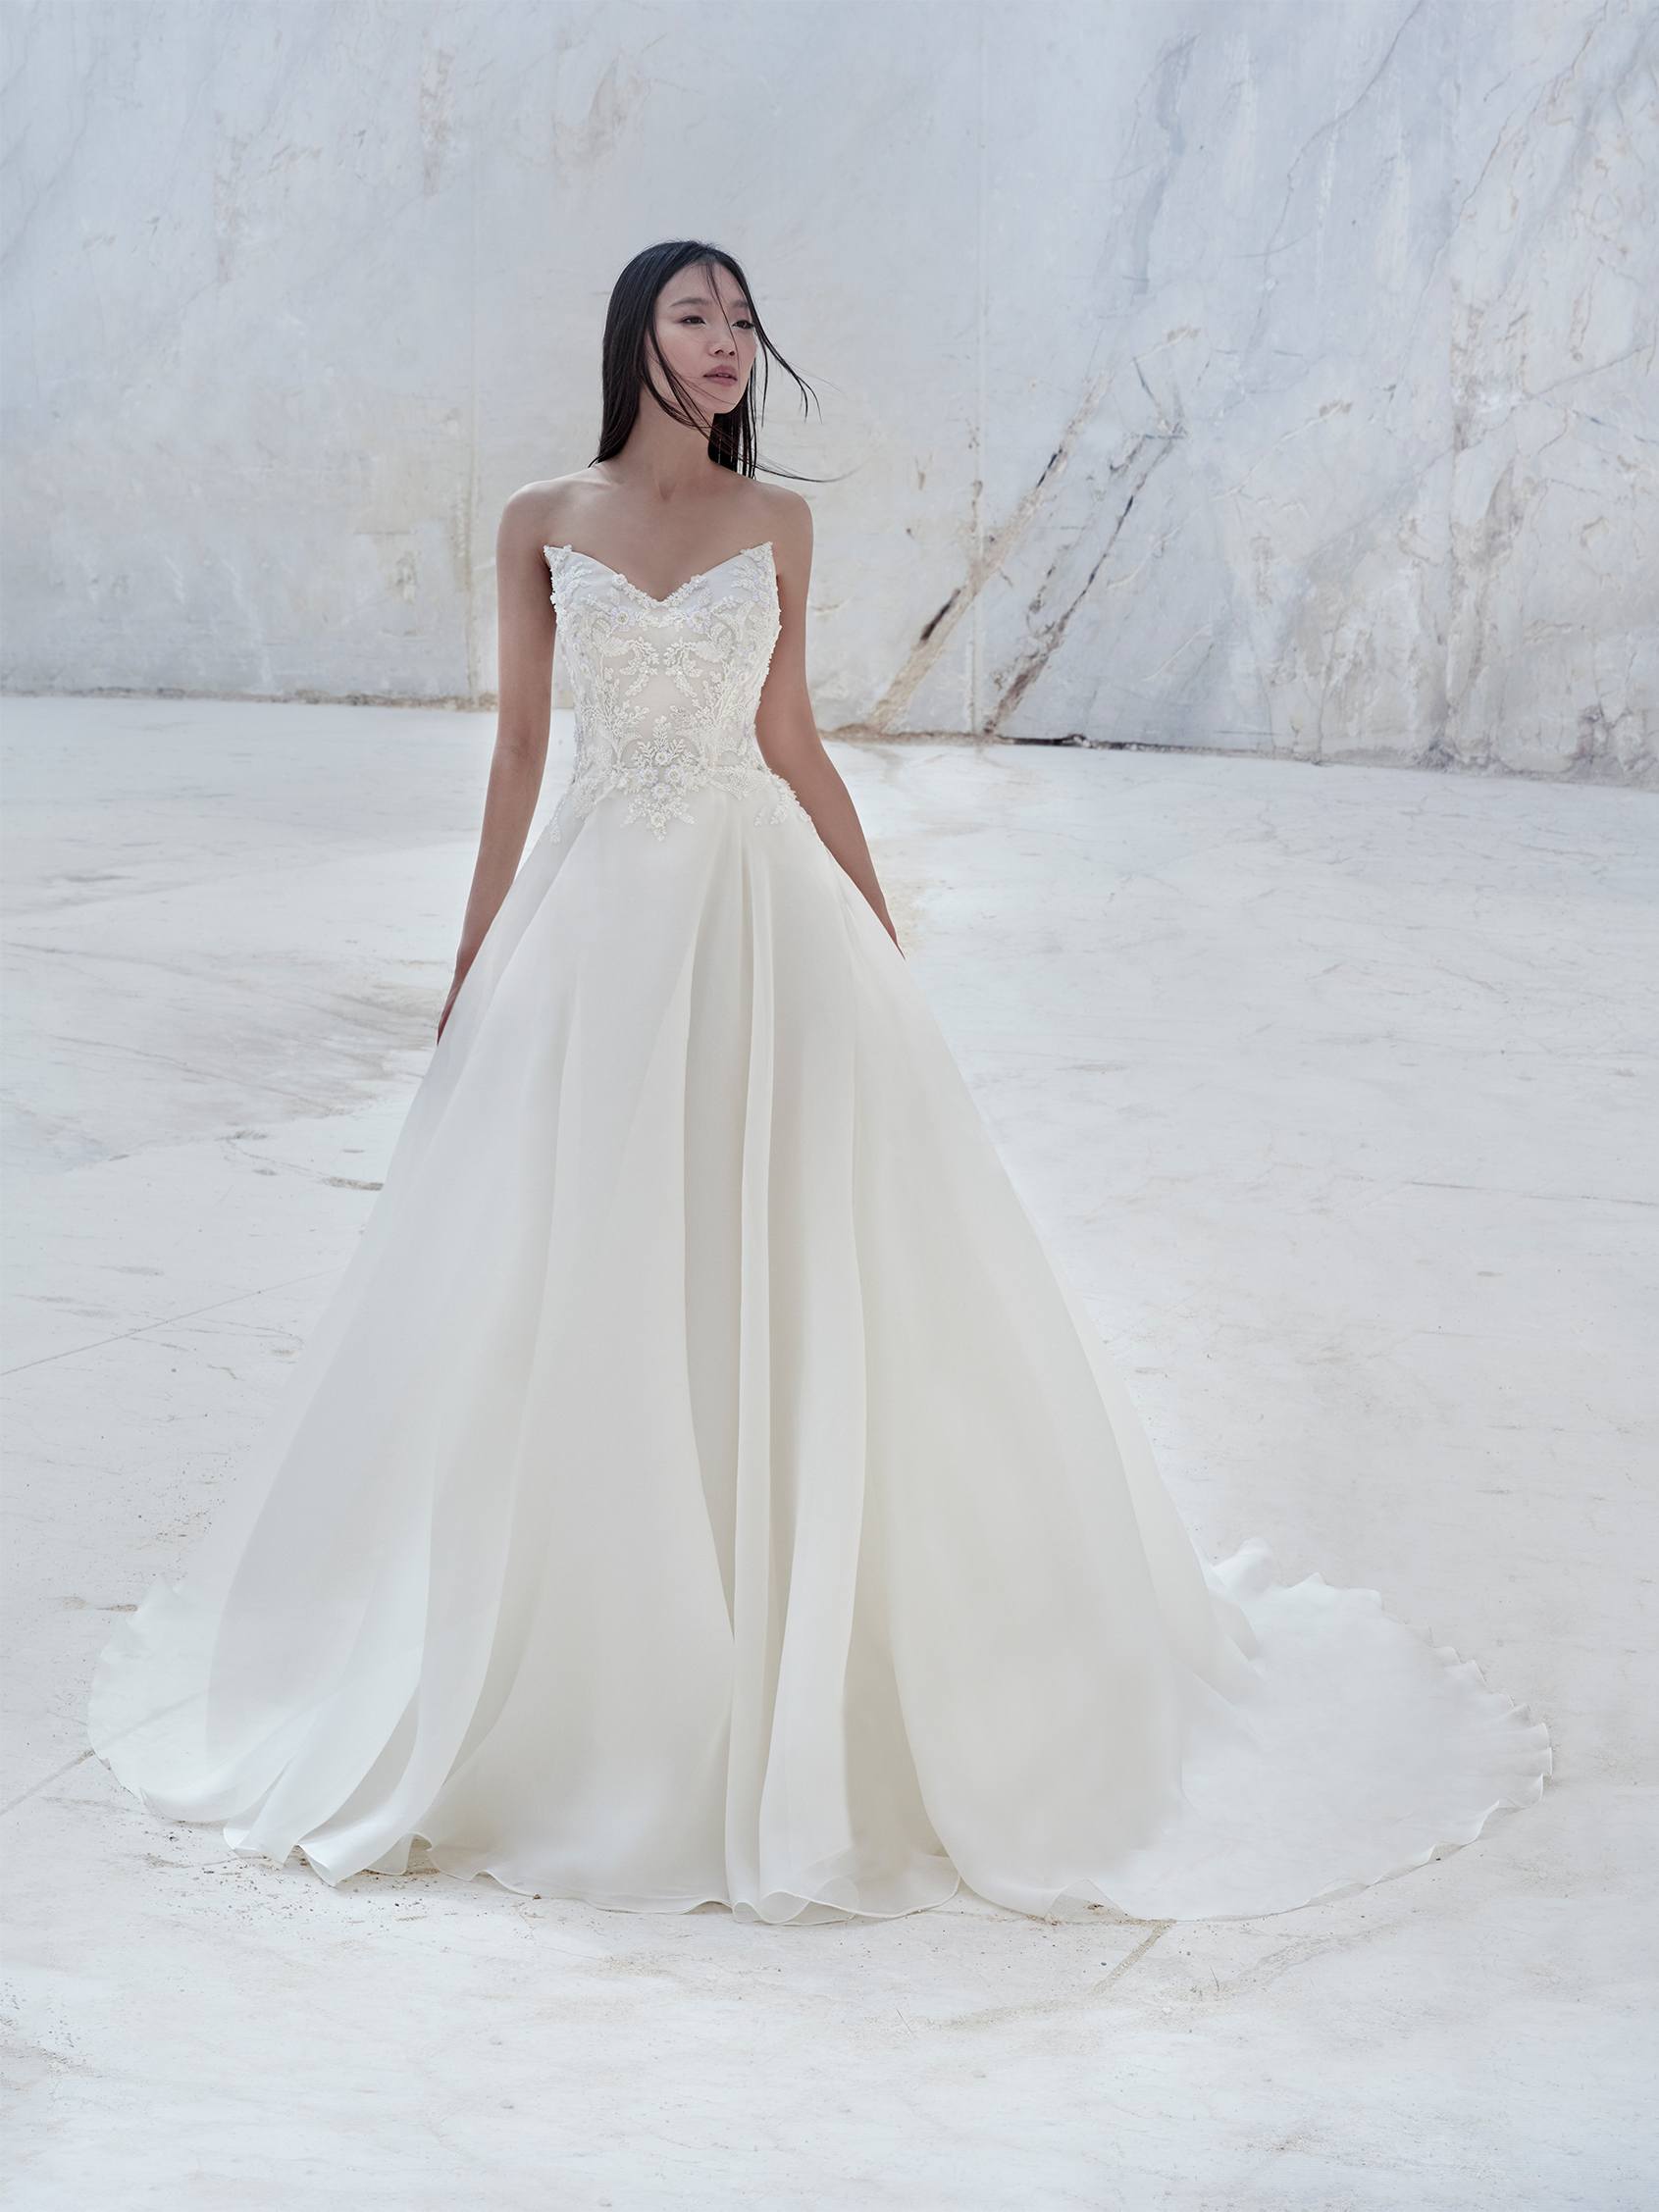 Yara the Tailorette - My bride Kristal This Pronovias dress come